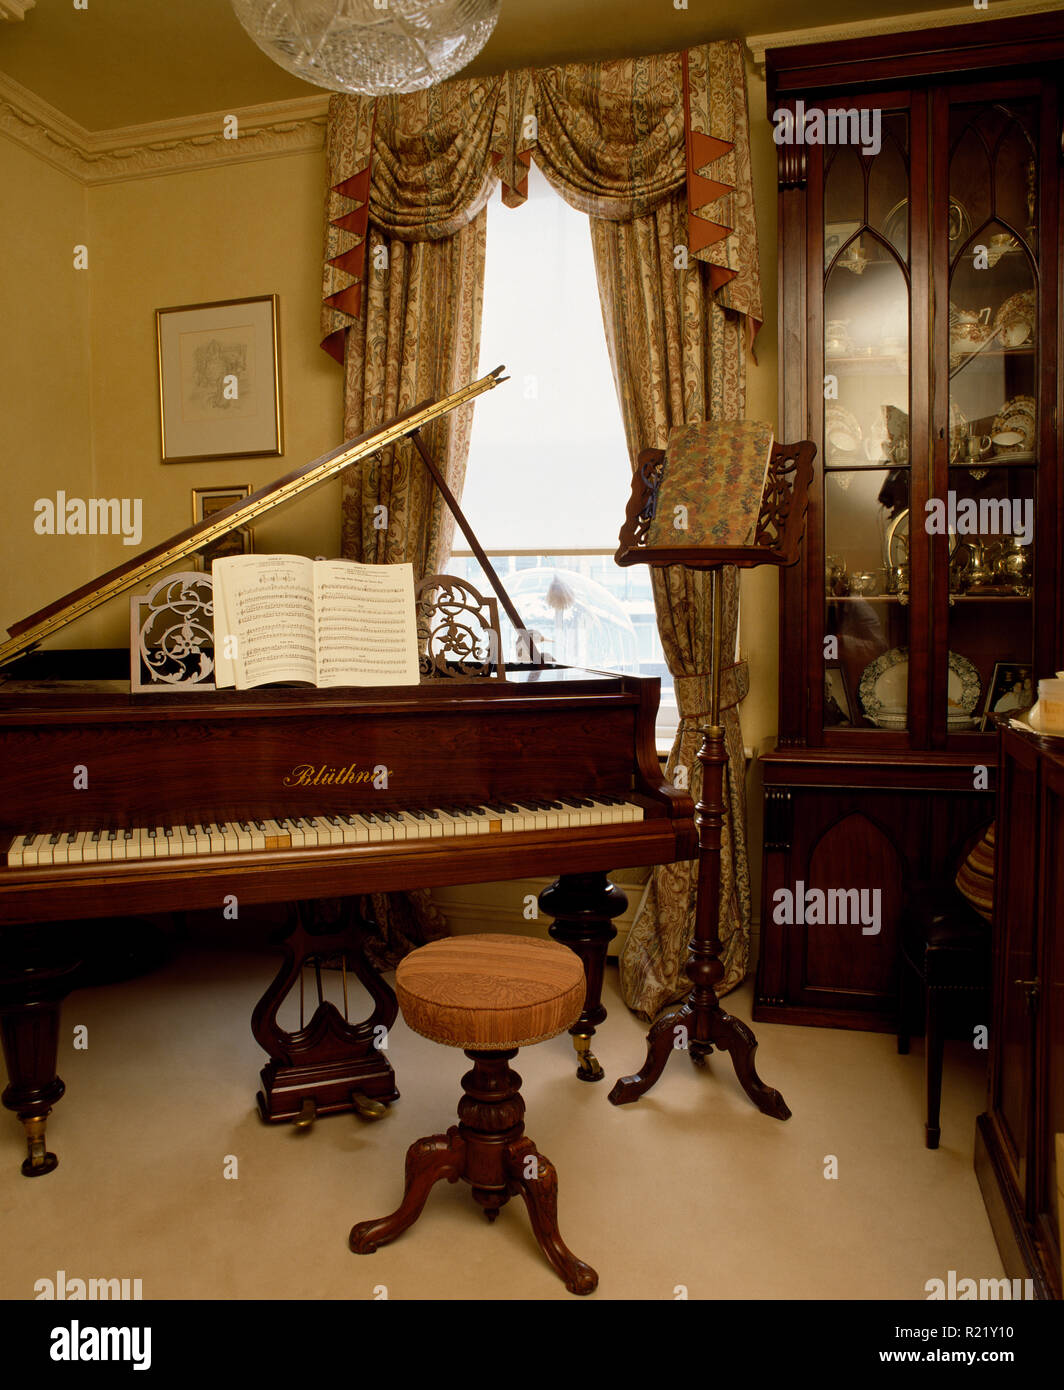 Grand piano in sitting room Stock Photo